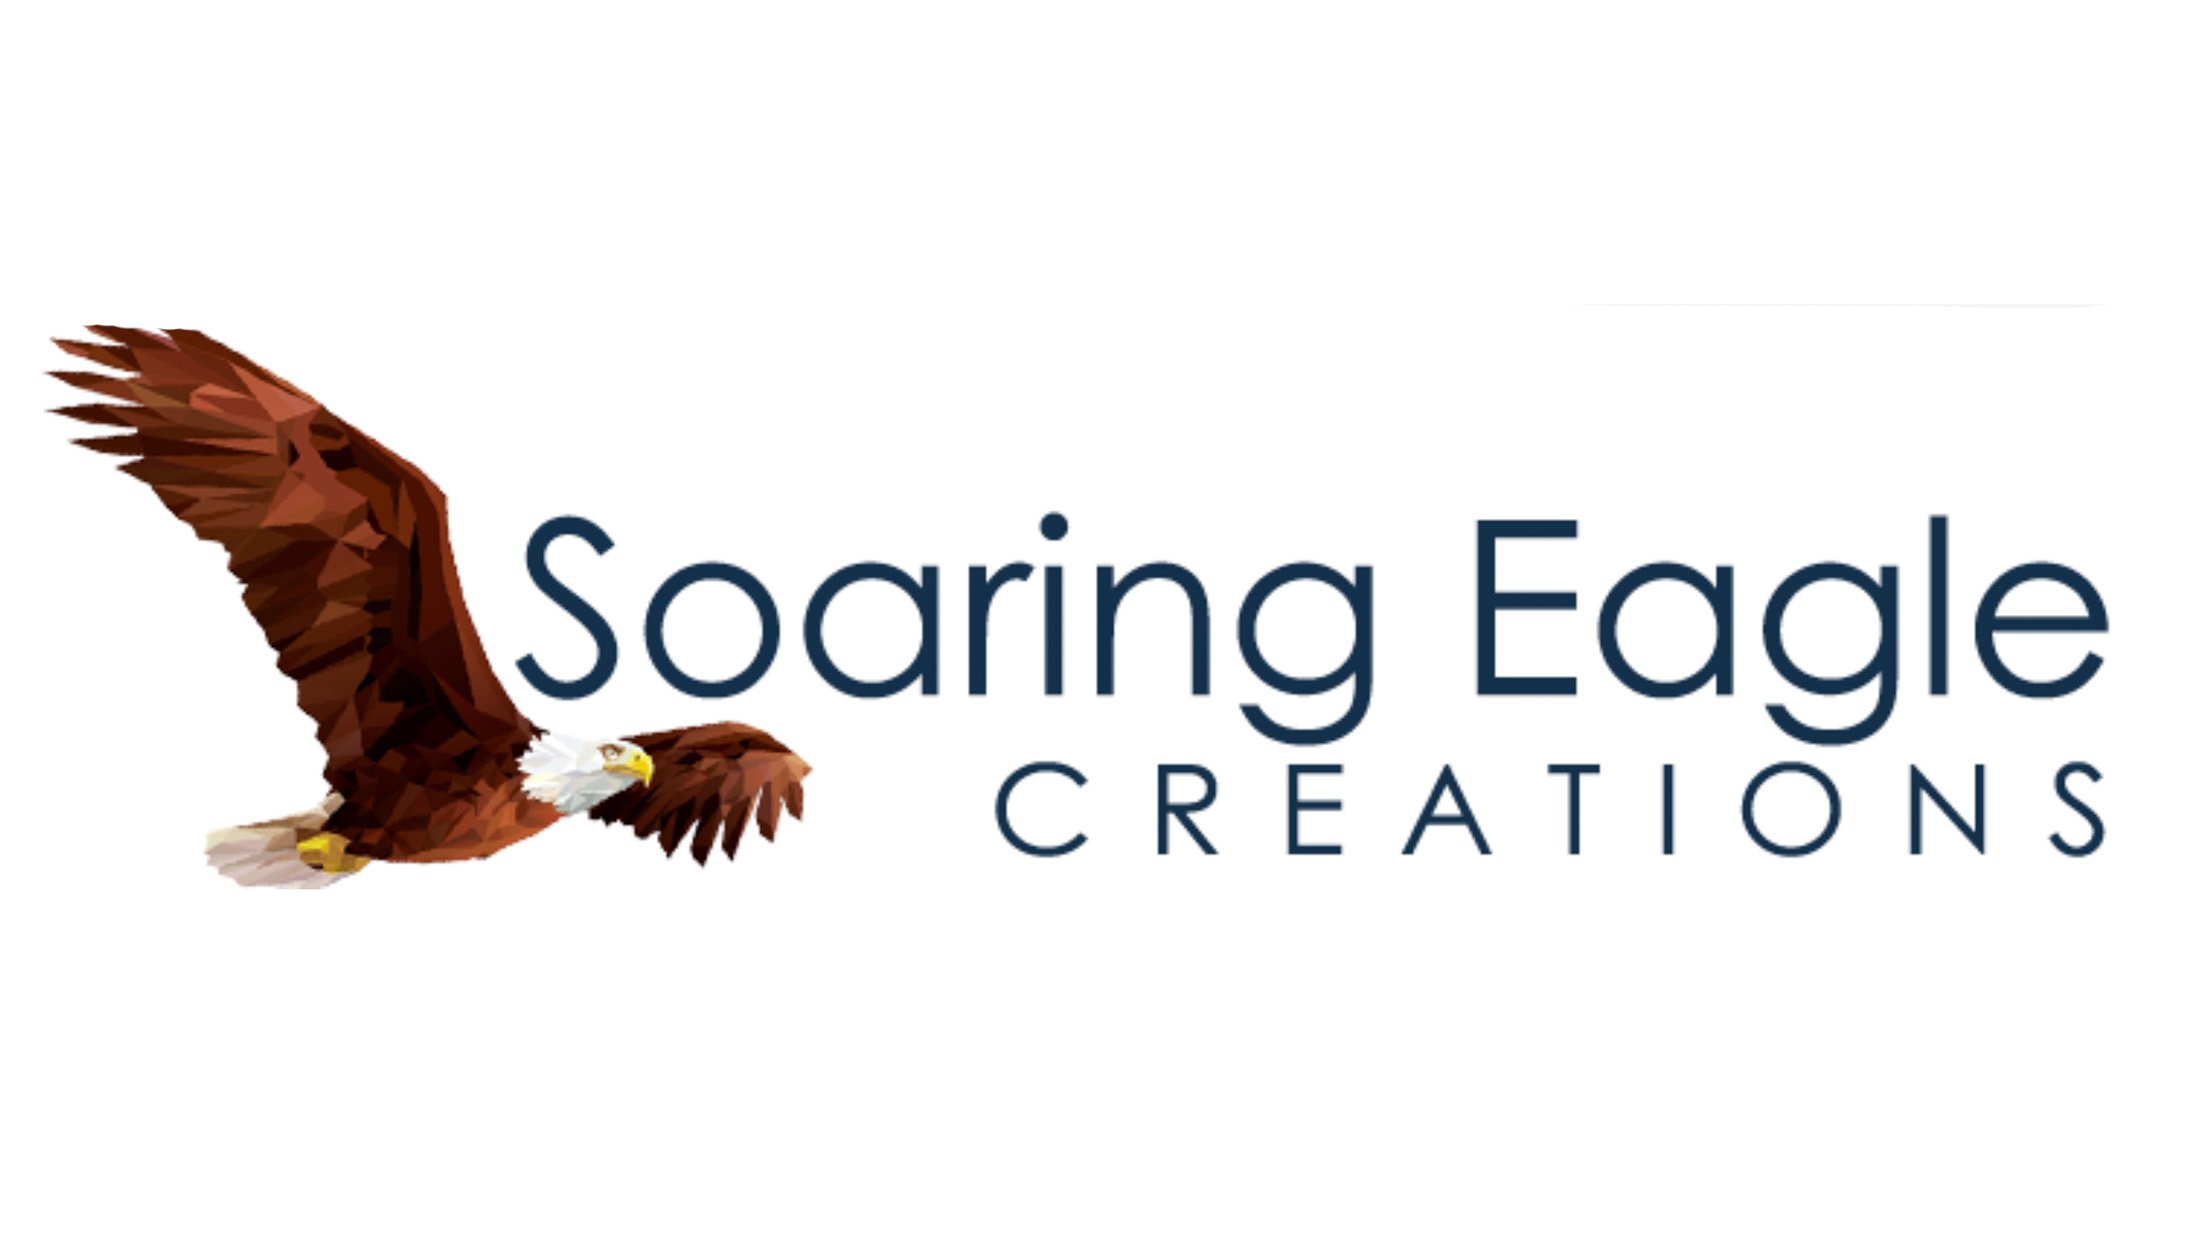 Soaring Eagle Creations